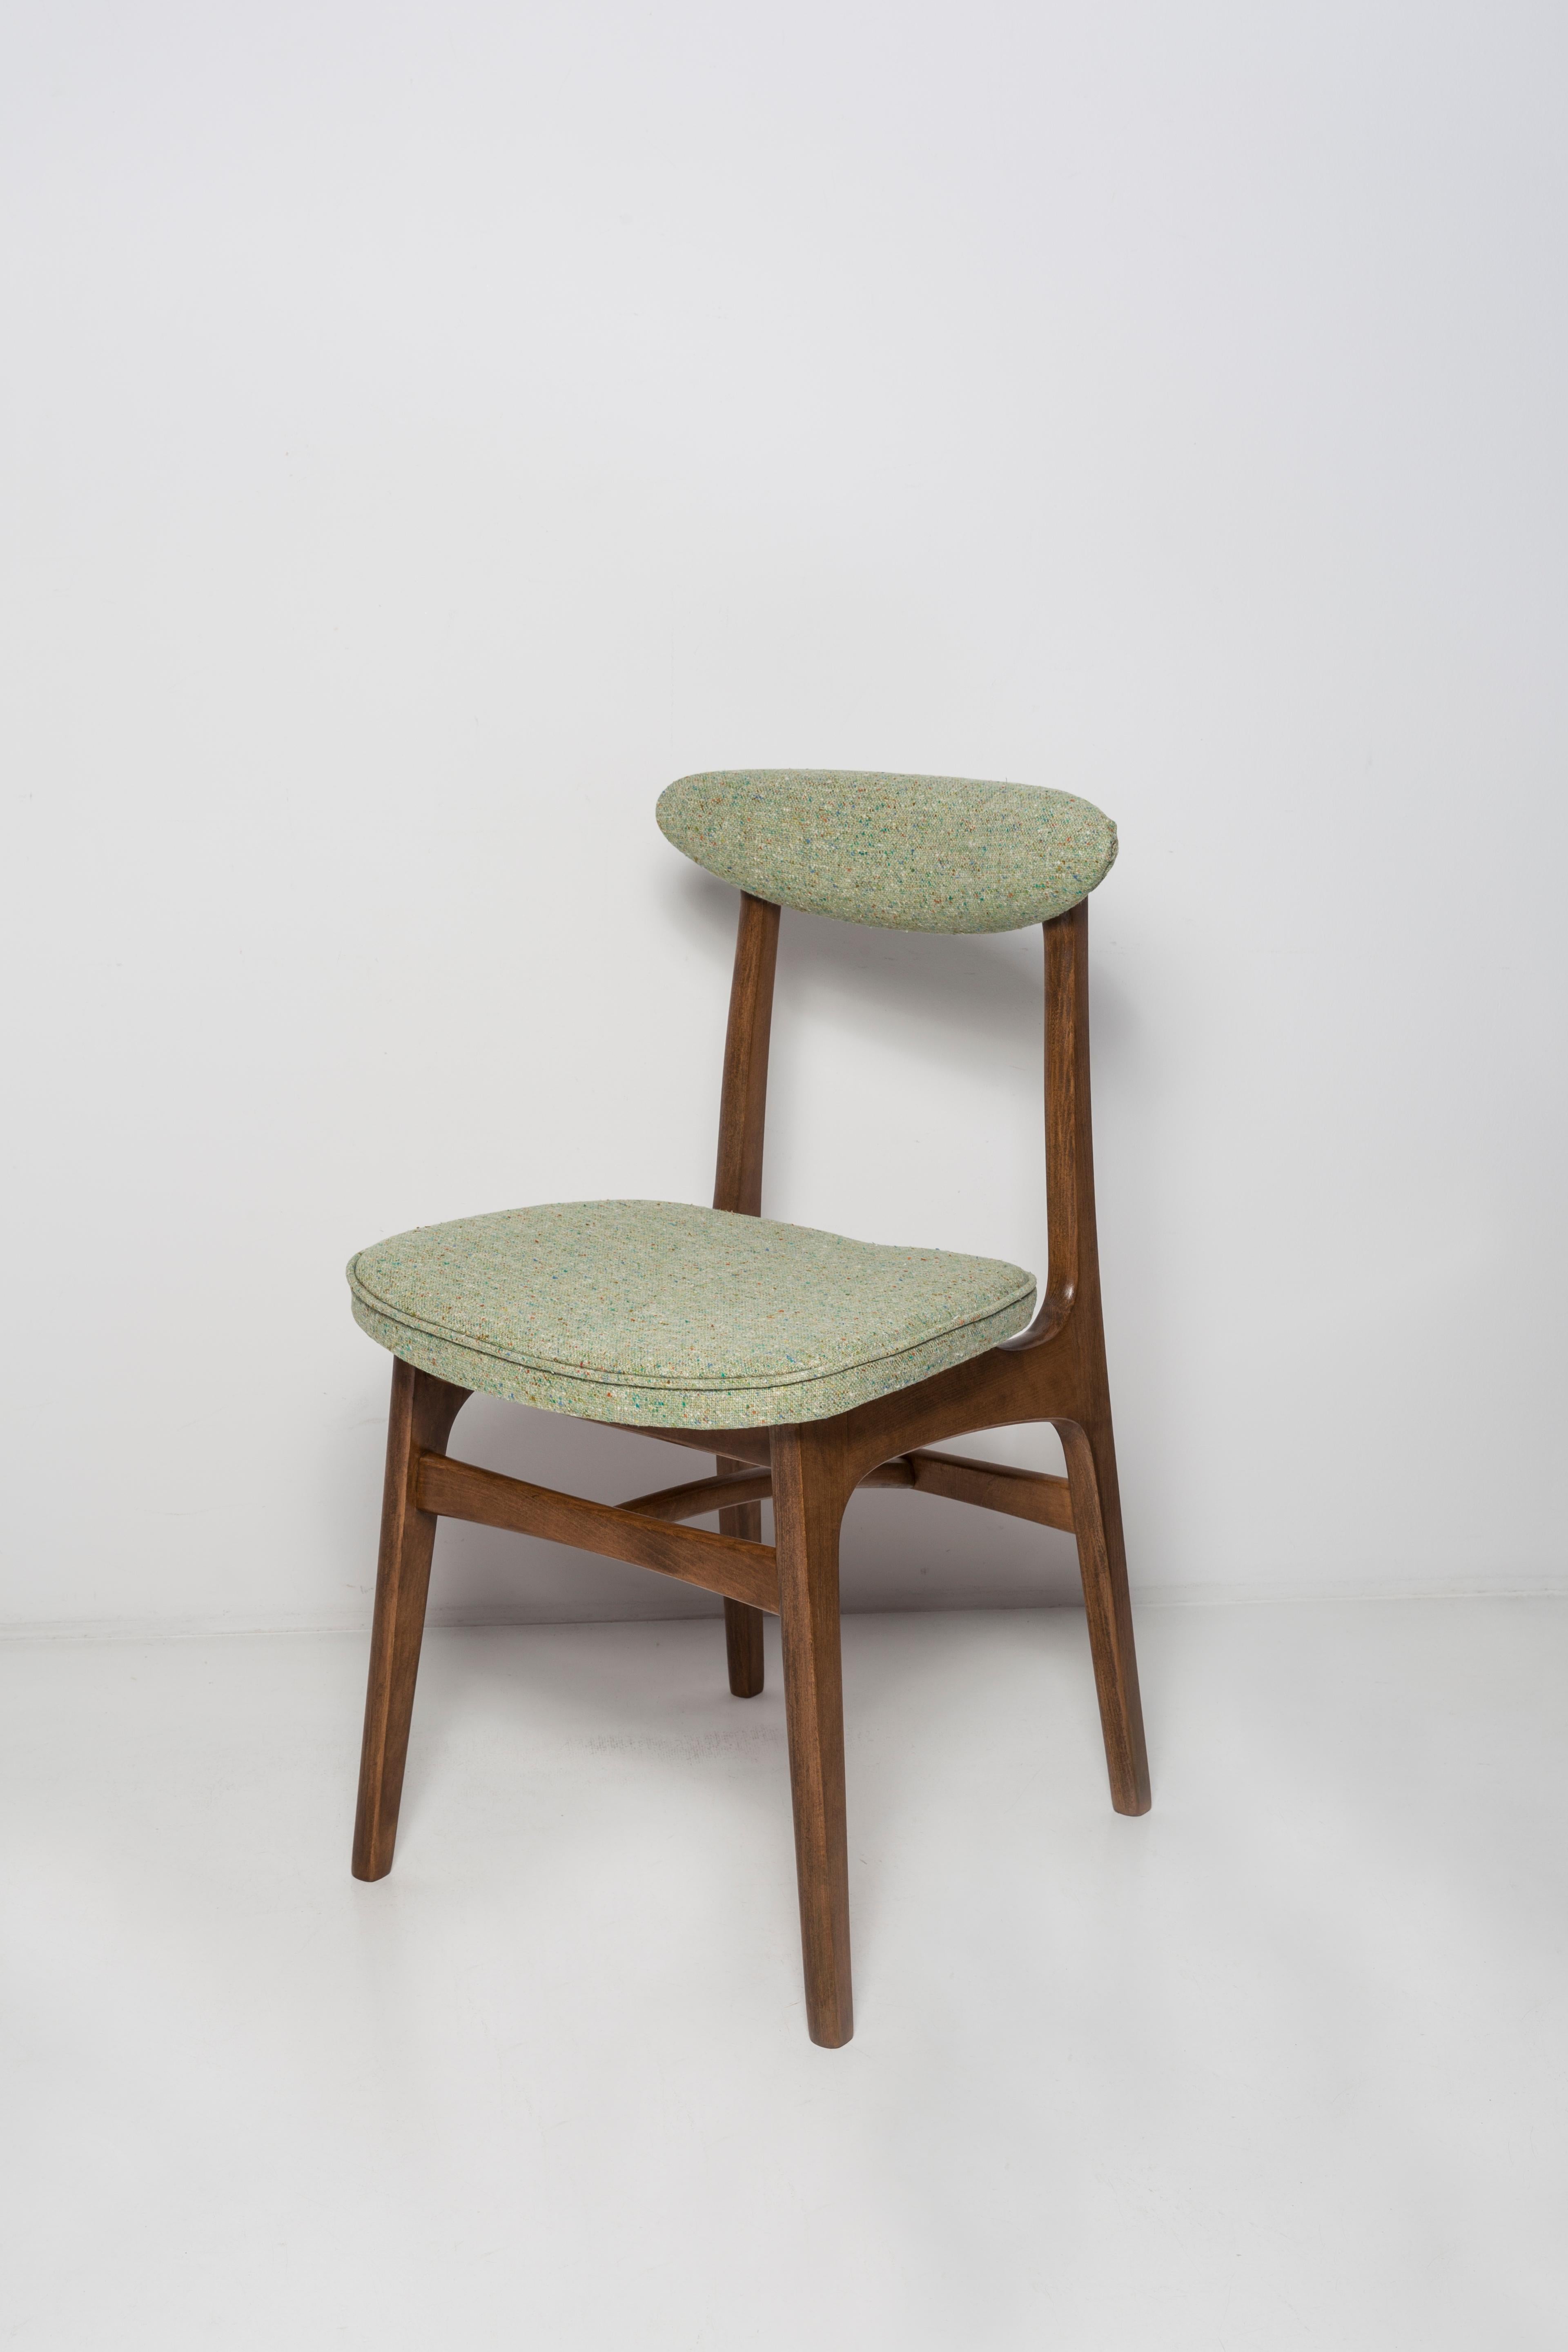 Twelve Mid Century Green Wool Chairs, Walnut Wood, Rajmund Halas, Poland, 1960s For Sale 5